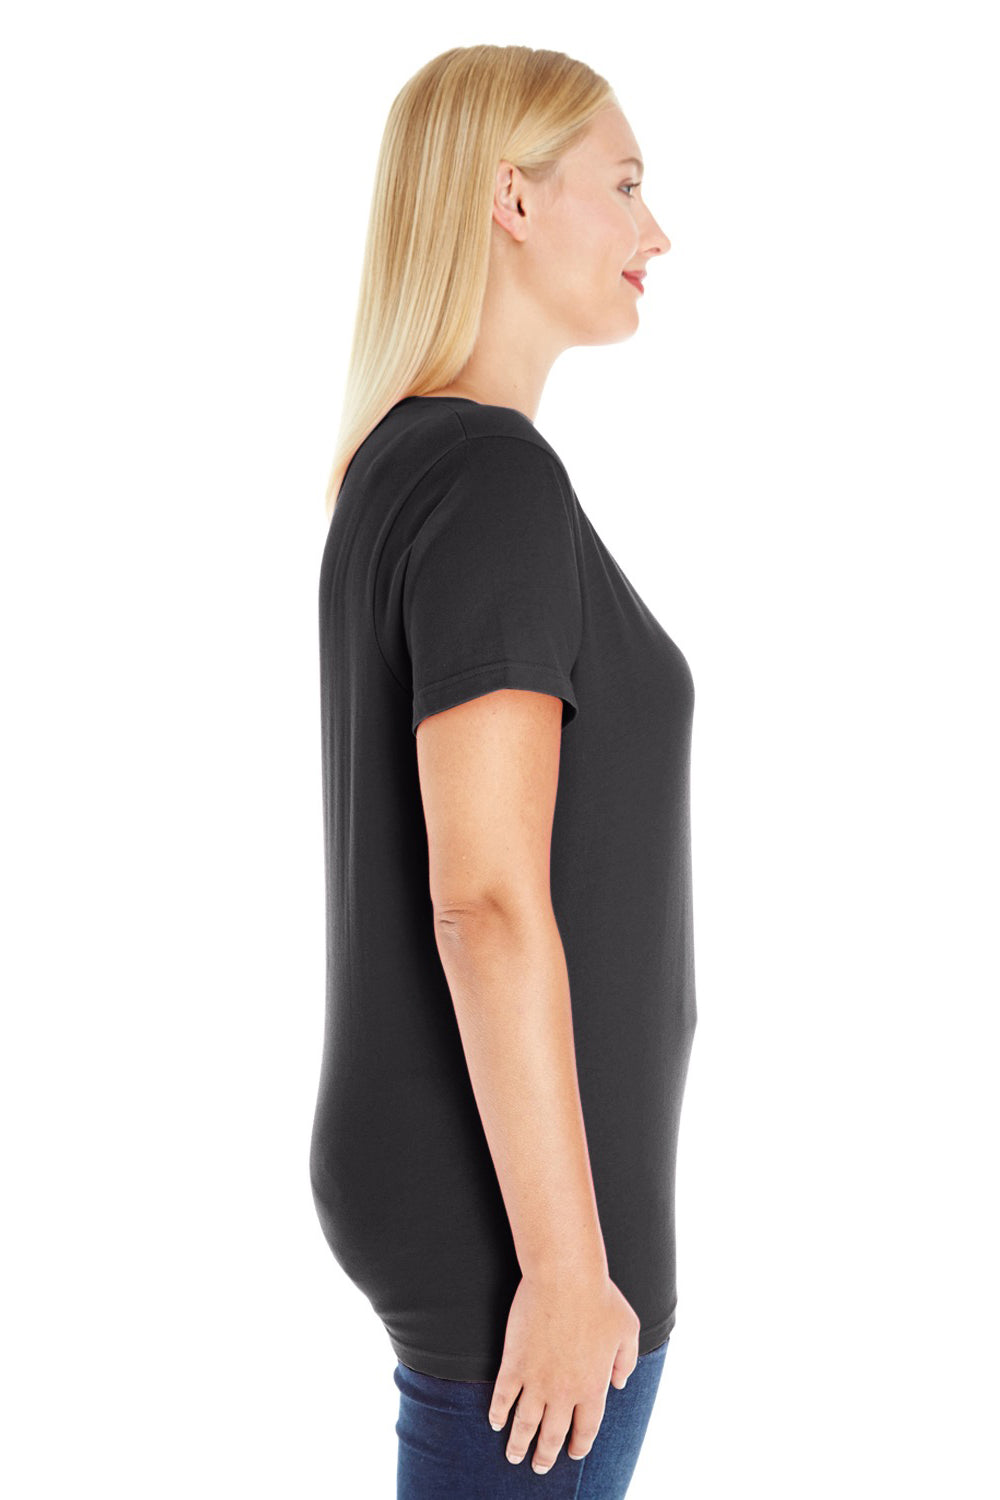 LAT 3804 Womens Premium Jersey Short Sleeve Scoop Neck T-Shirt Black Side